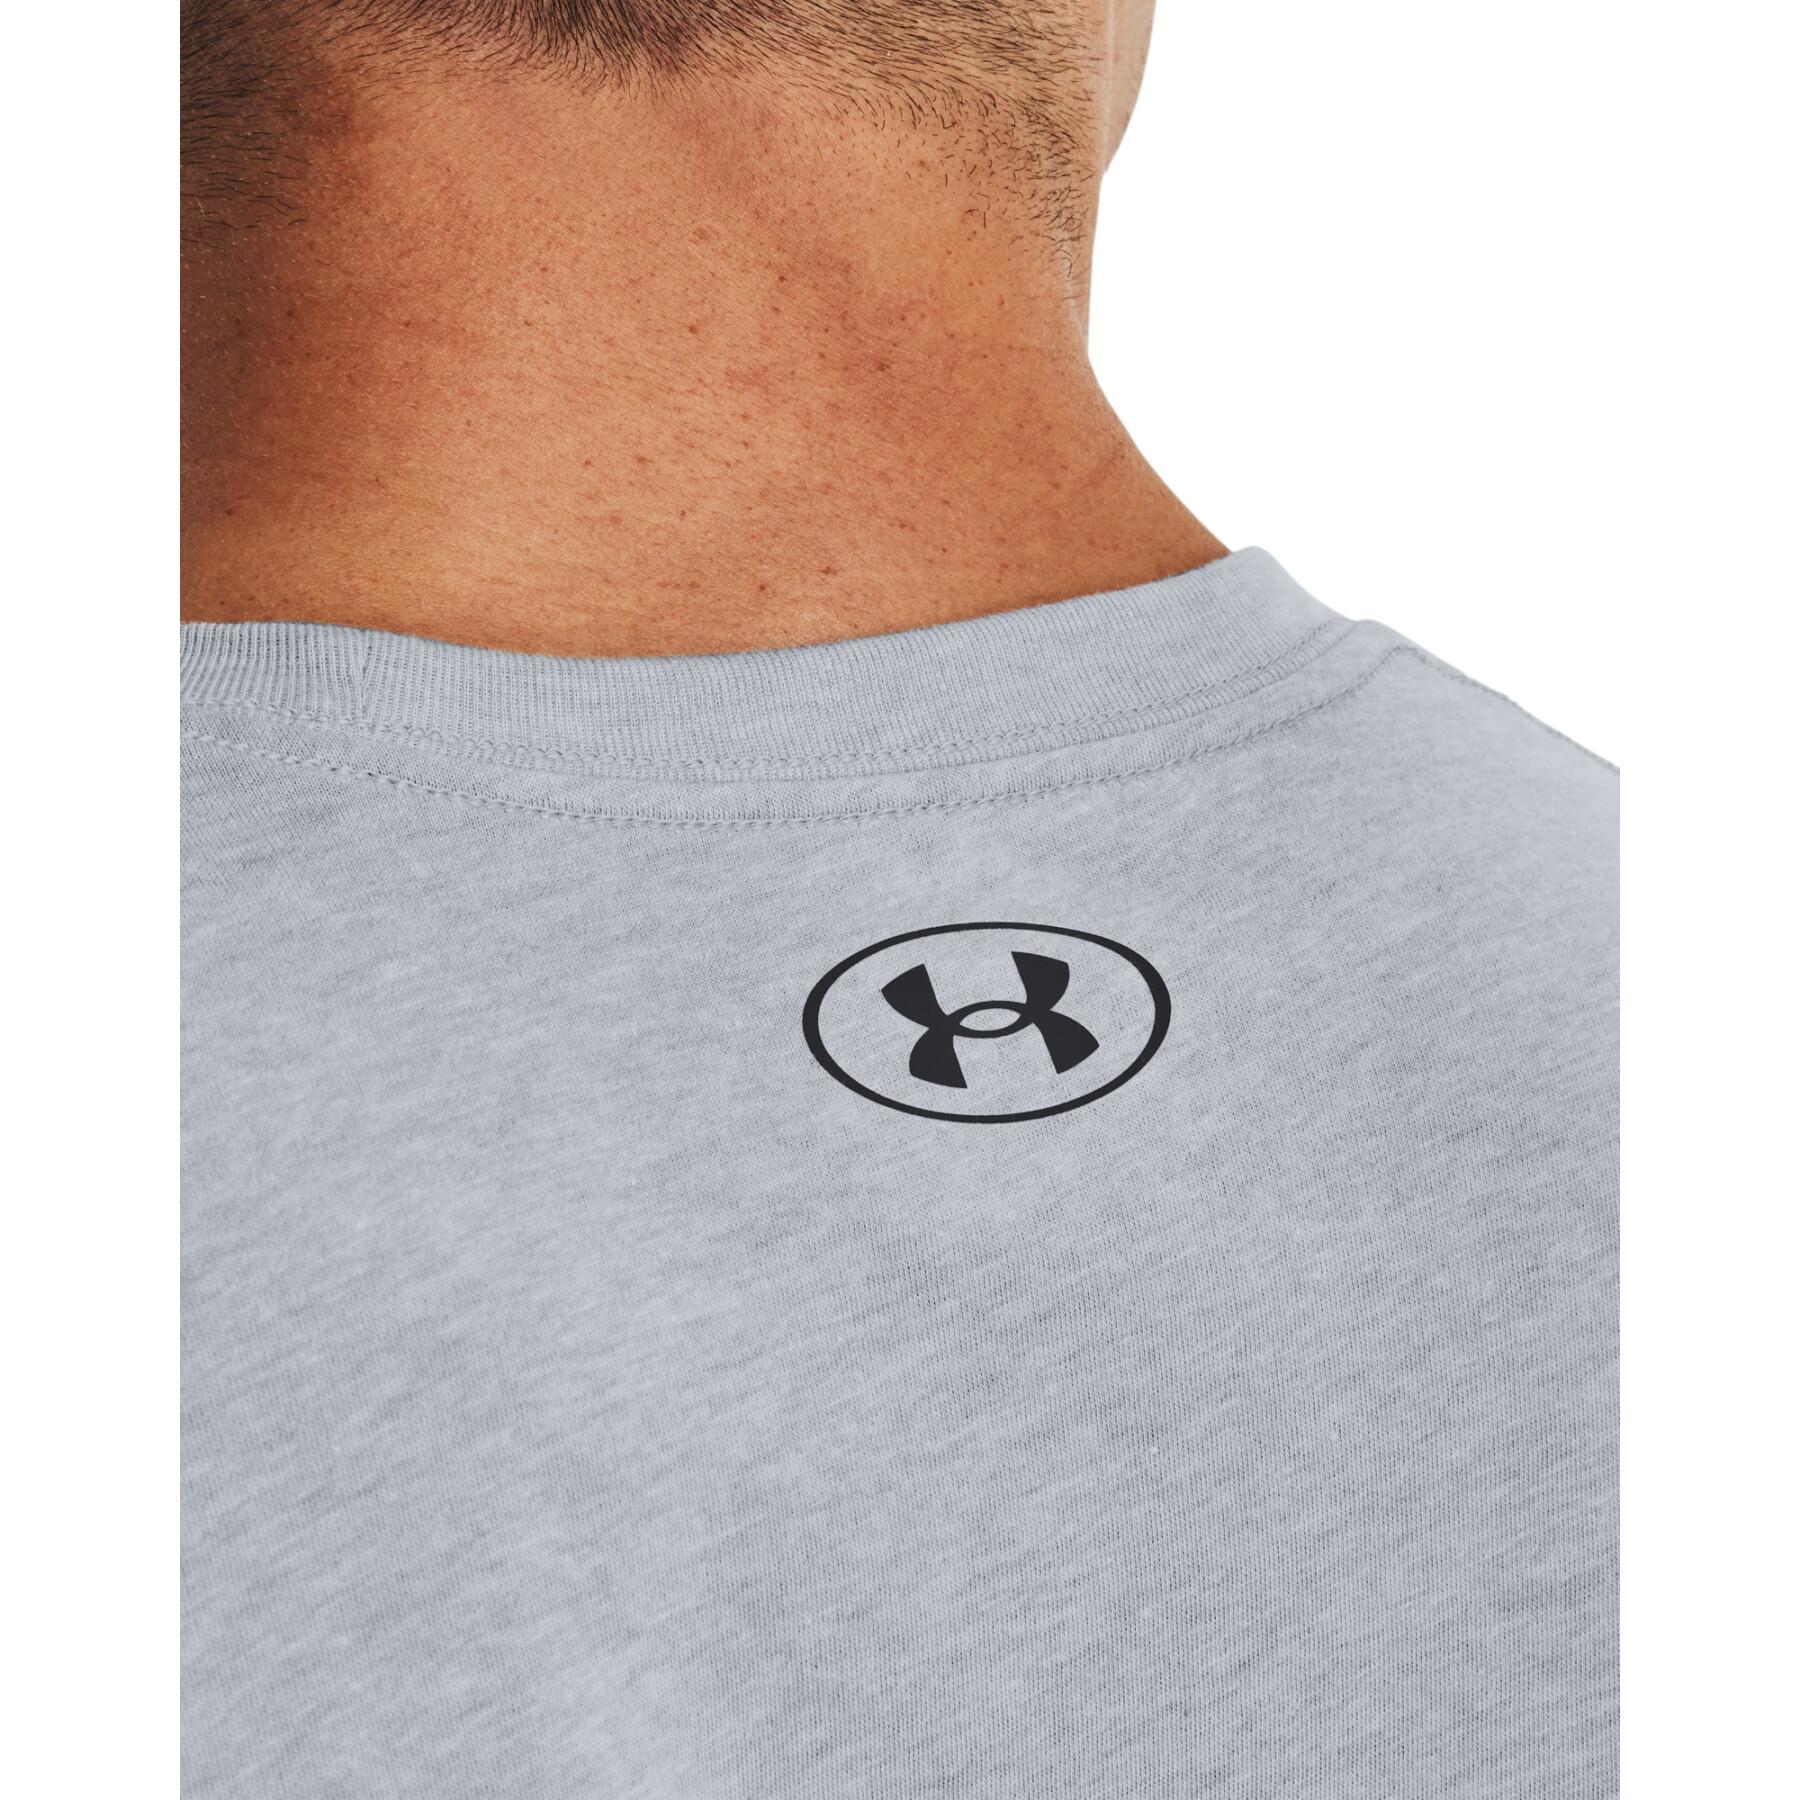 Camiseta Under Armour Bball Branded Wordmark